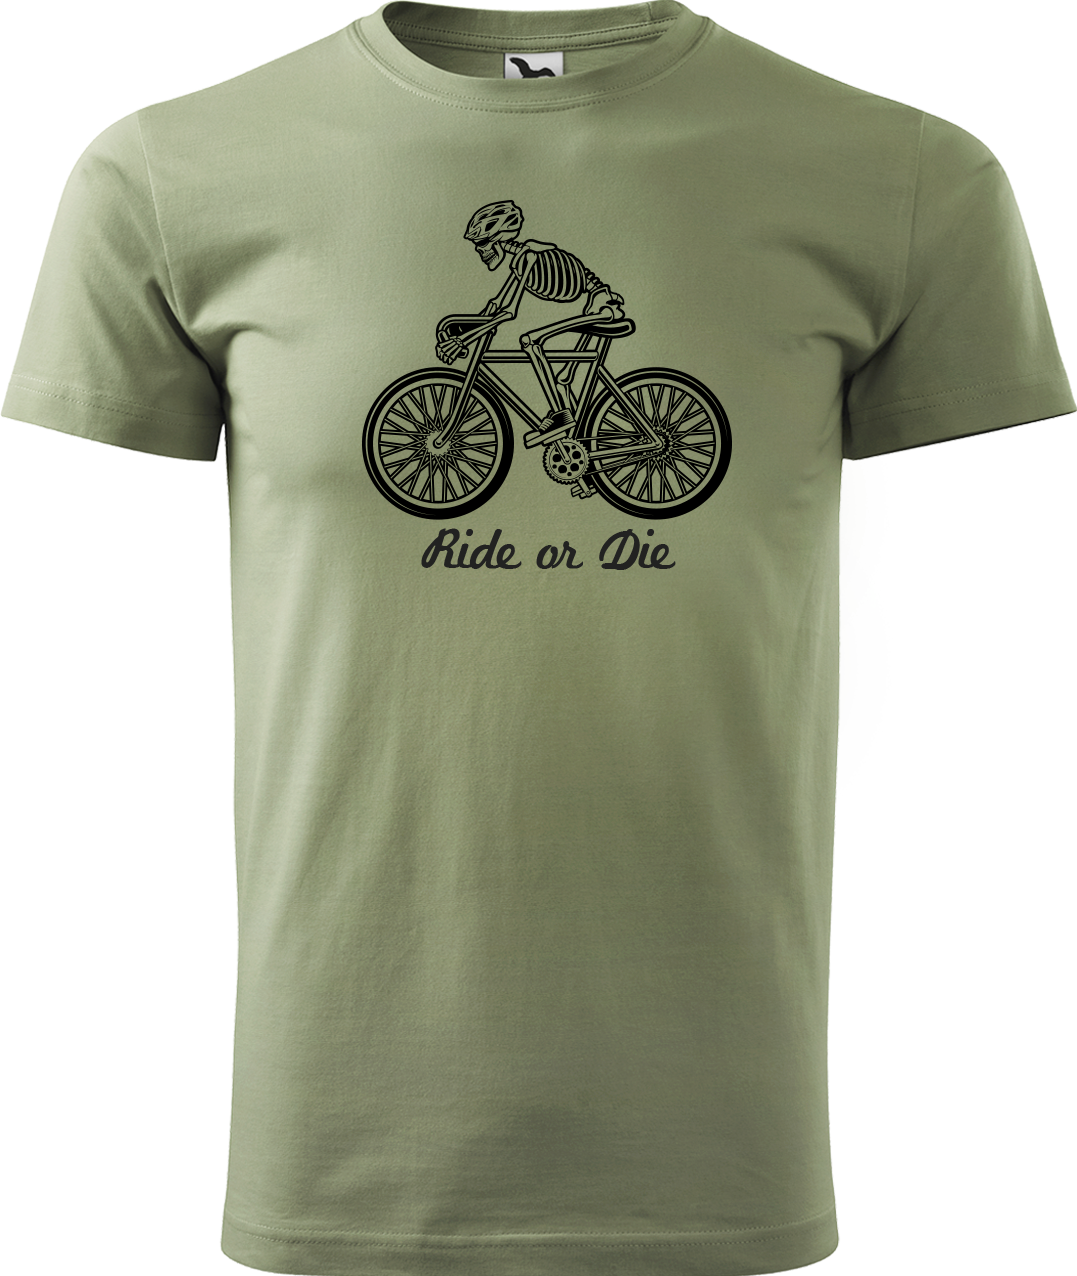 Pánské tričko pro cyklistu - Ride or Die Velikost: XL, Barva: Světlá khaki (28)